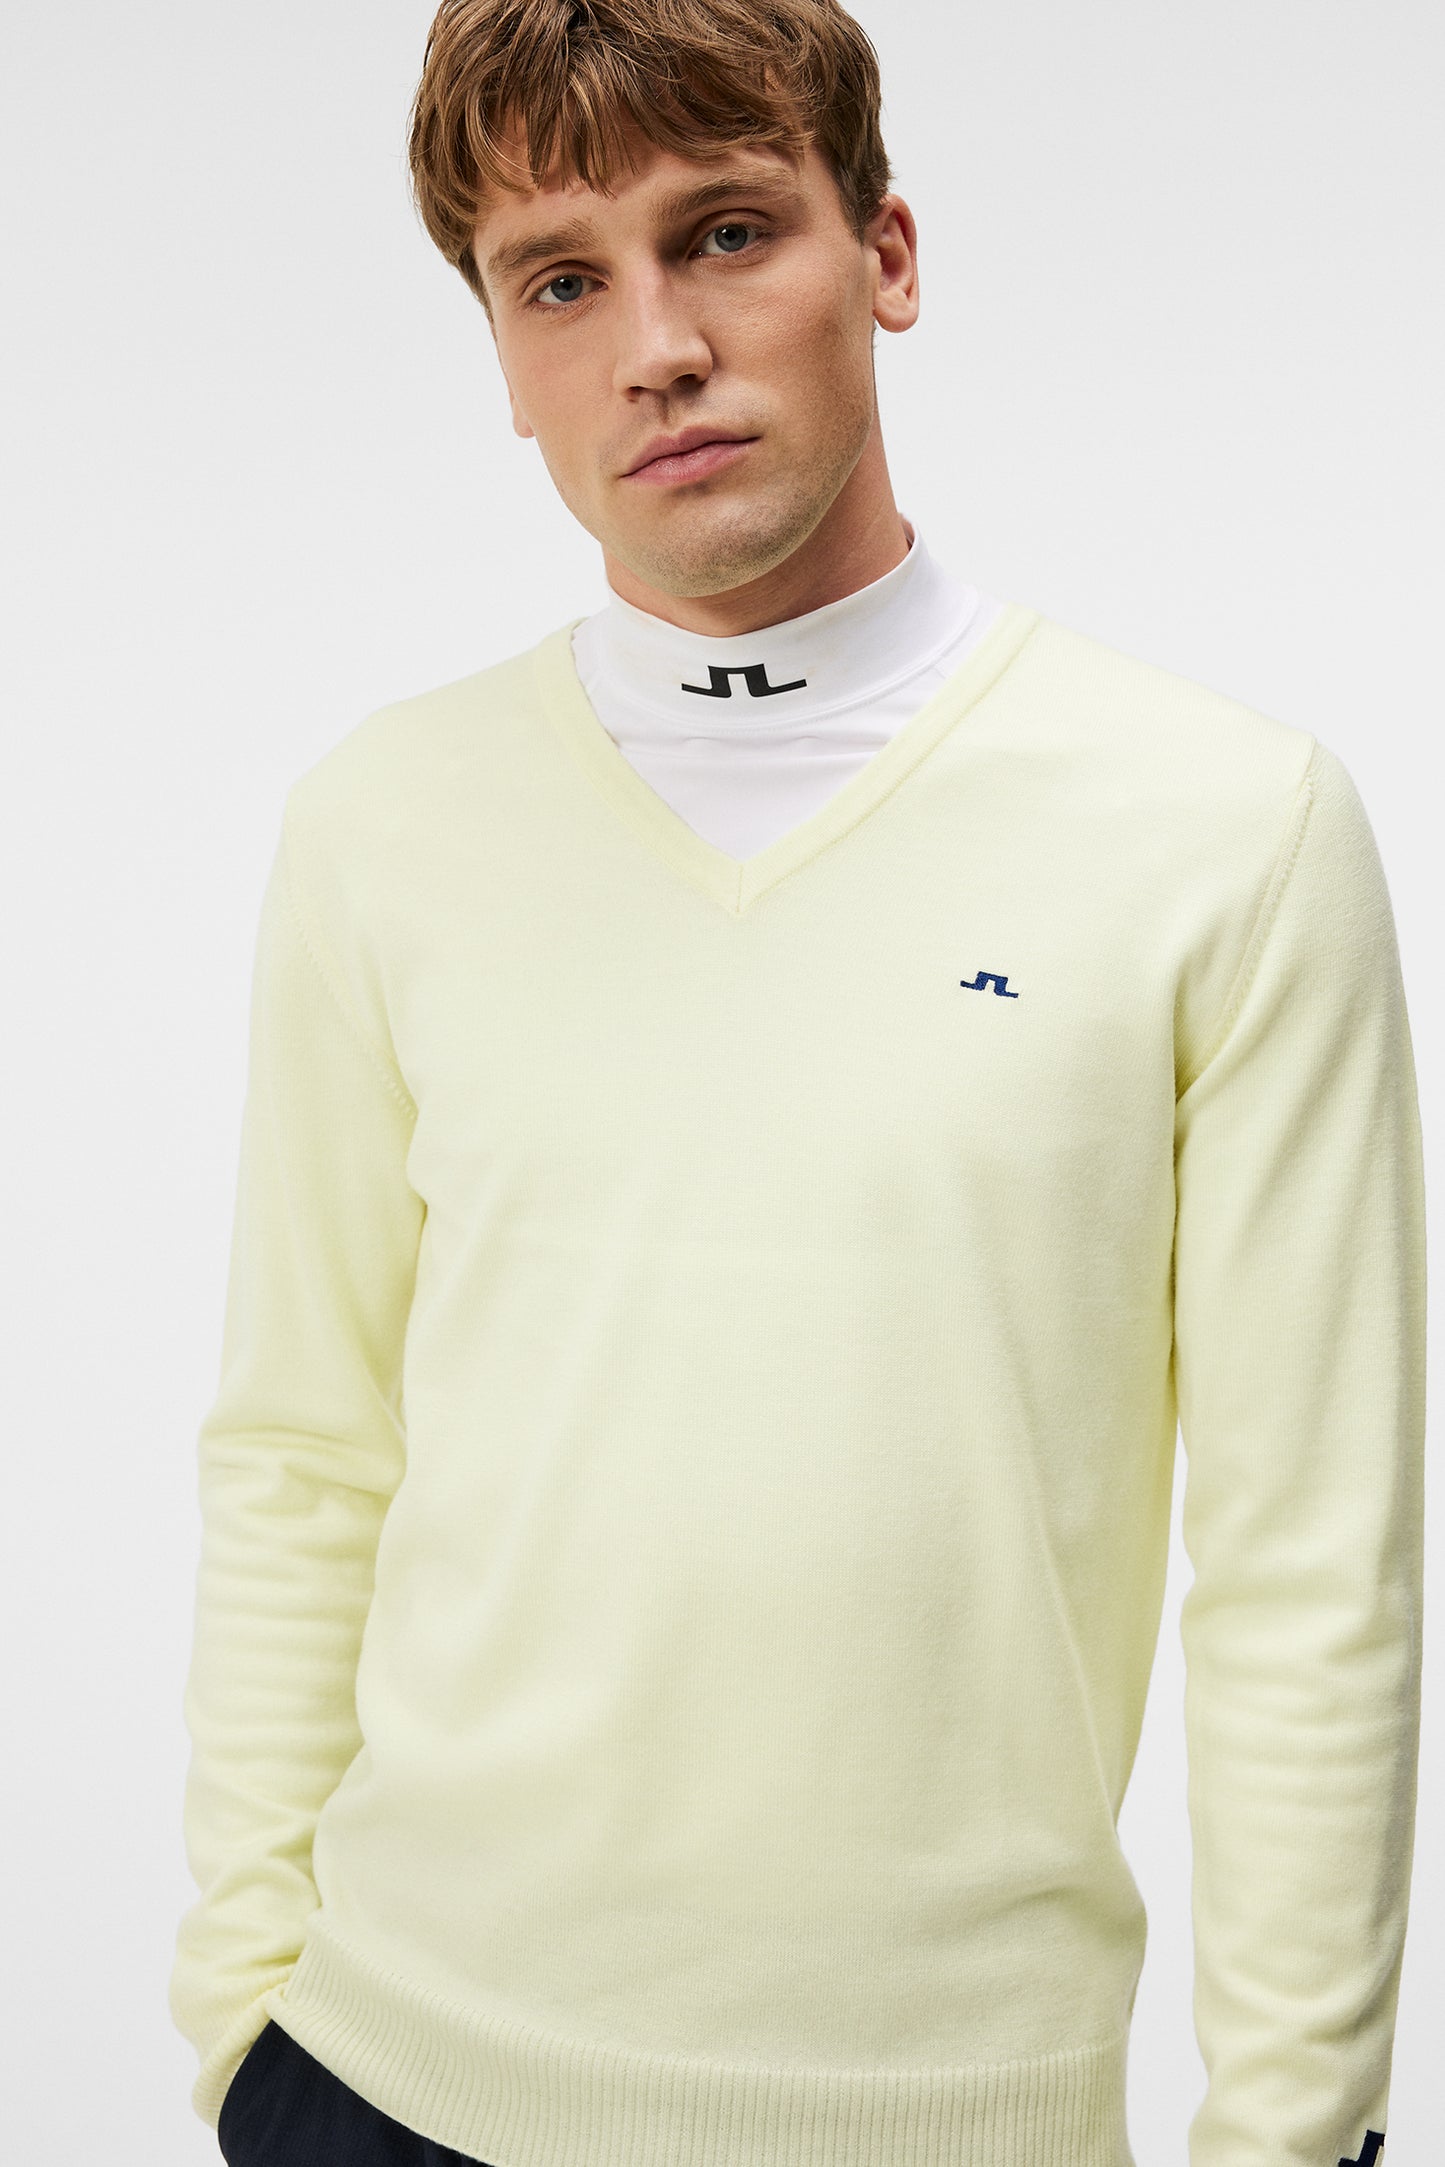 Lymann Knitted Sweater / Wax Yellow